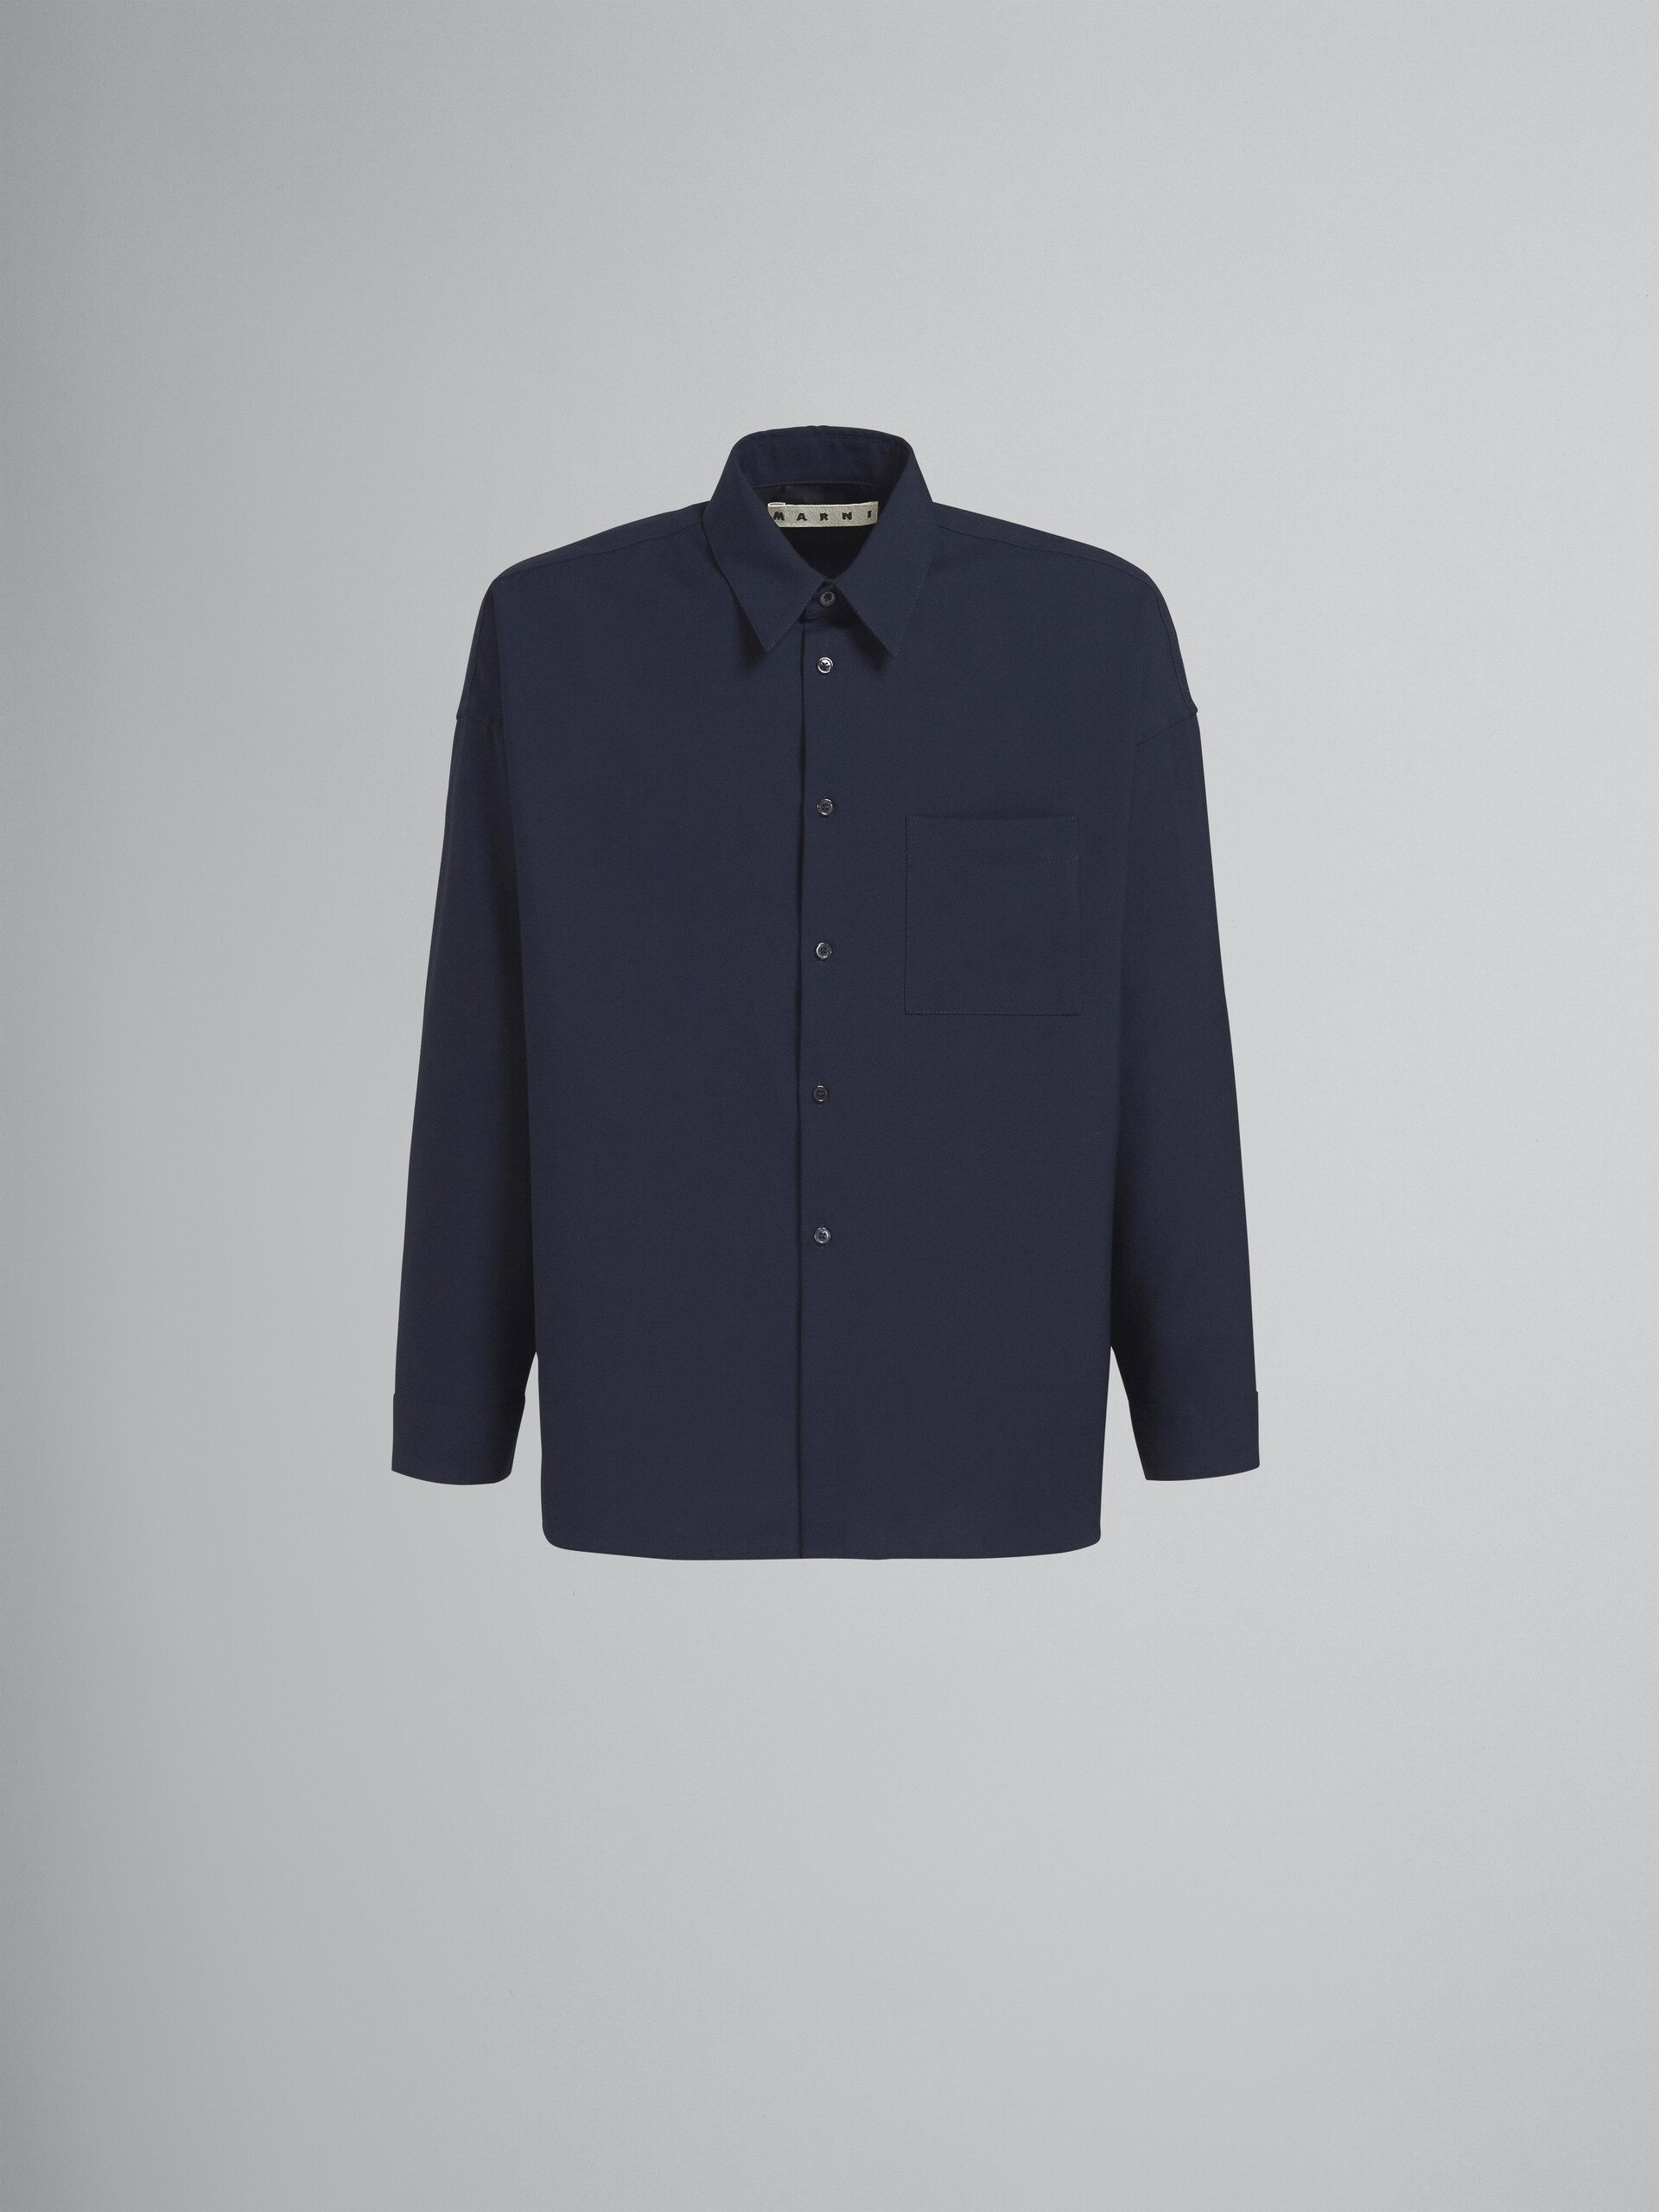 Blue black tropical wool shirt - Shirts - Image 1